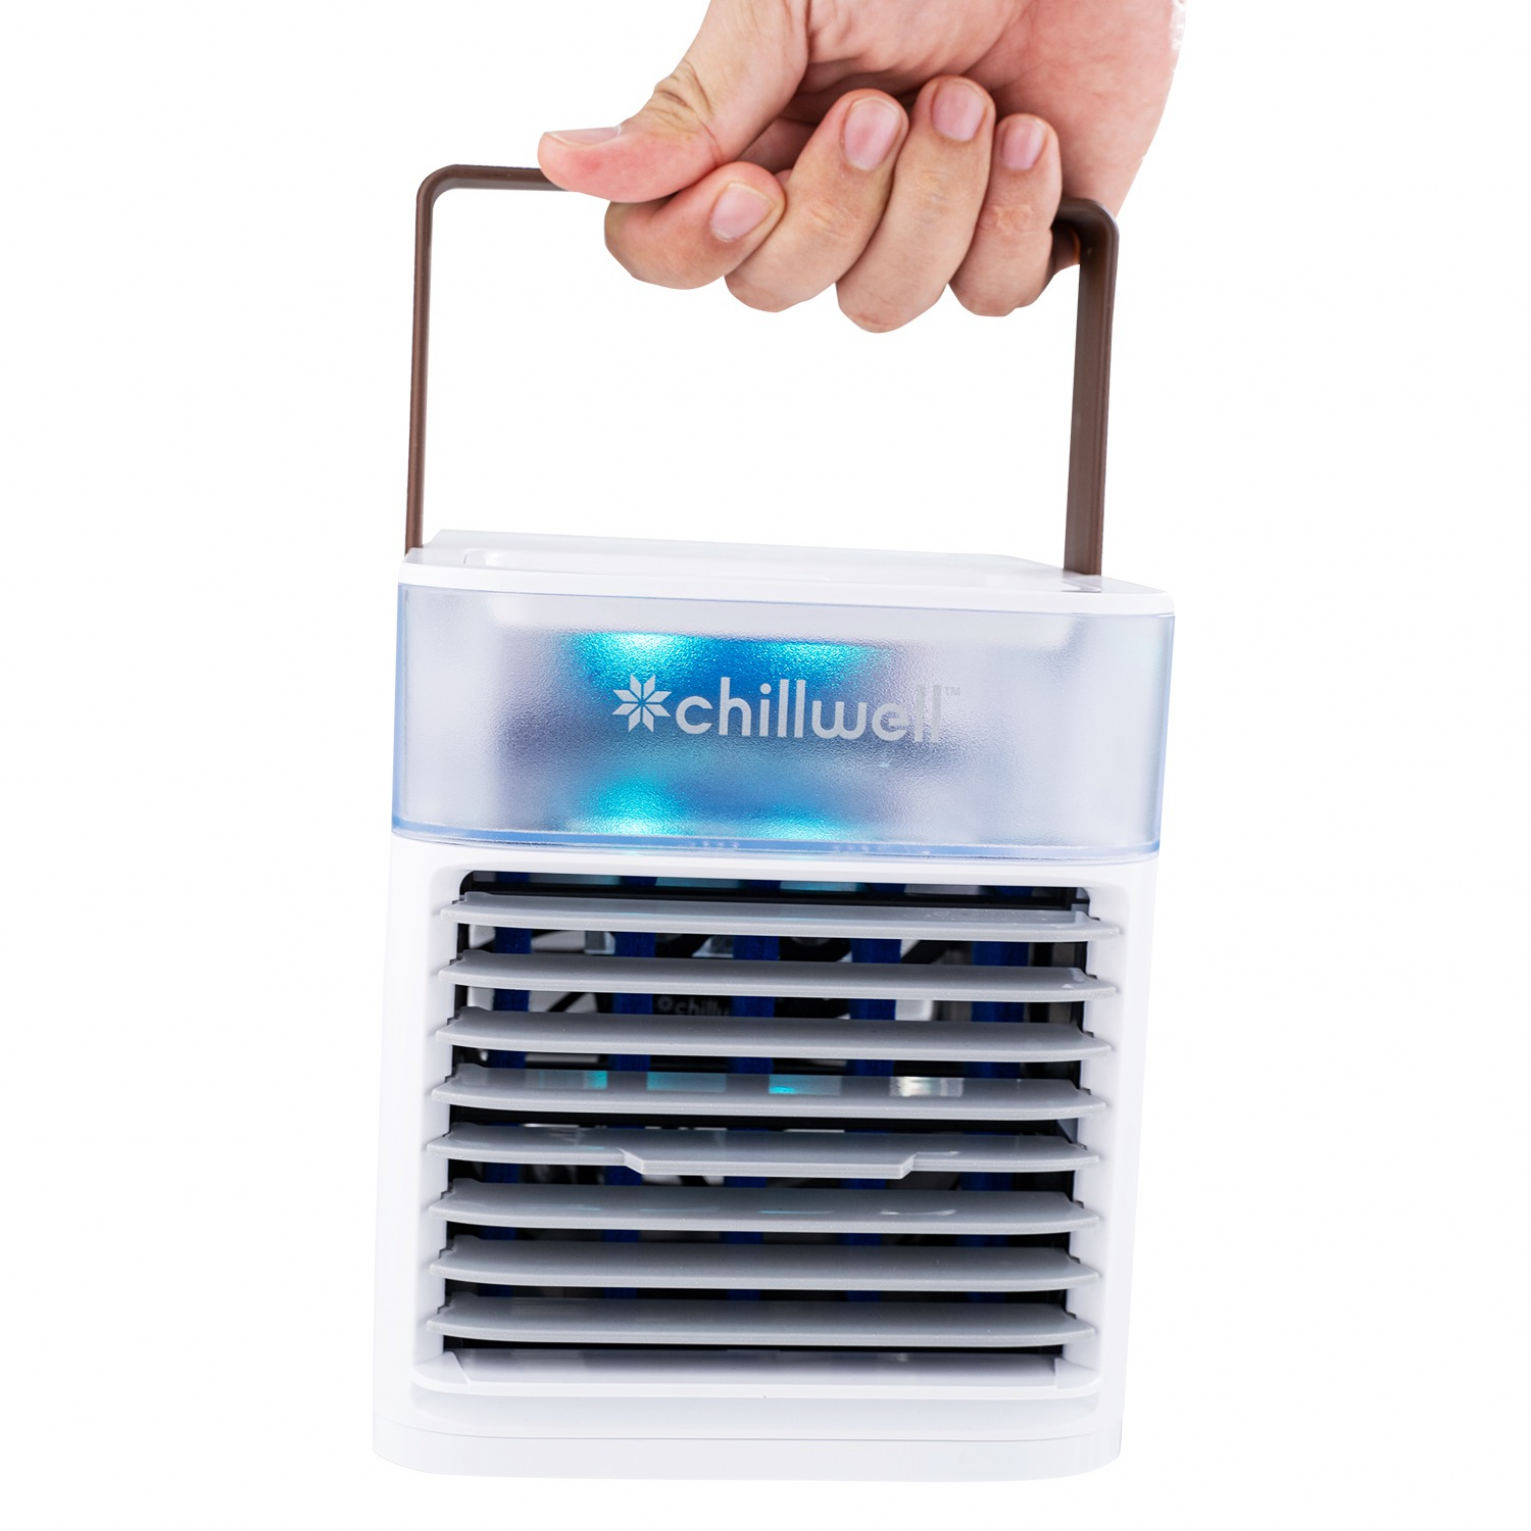 Chillwell Ac Mini Portable